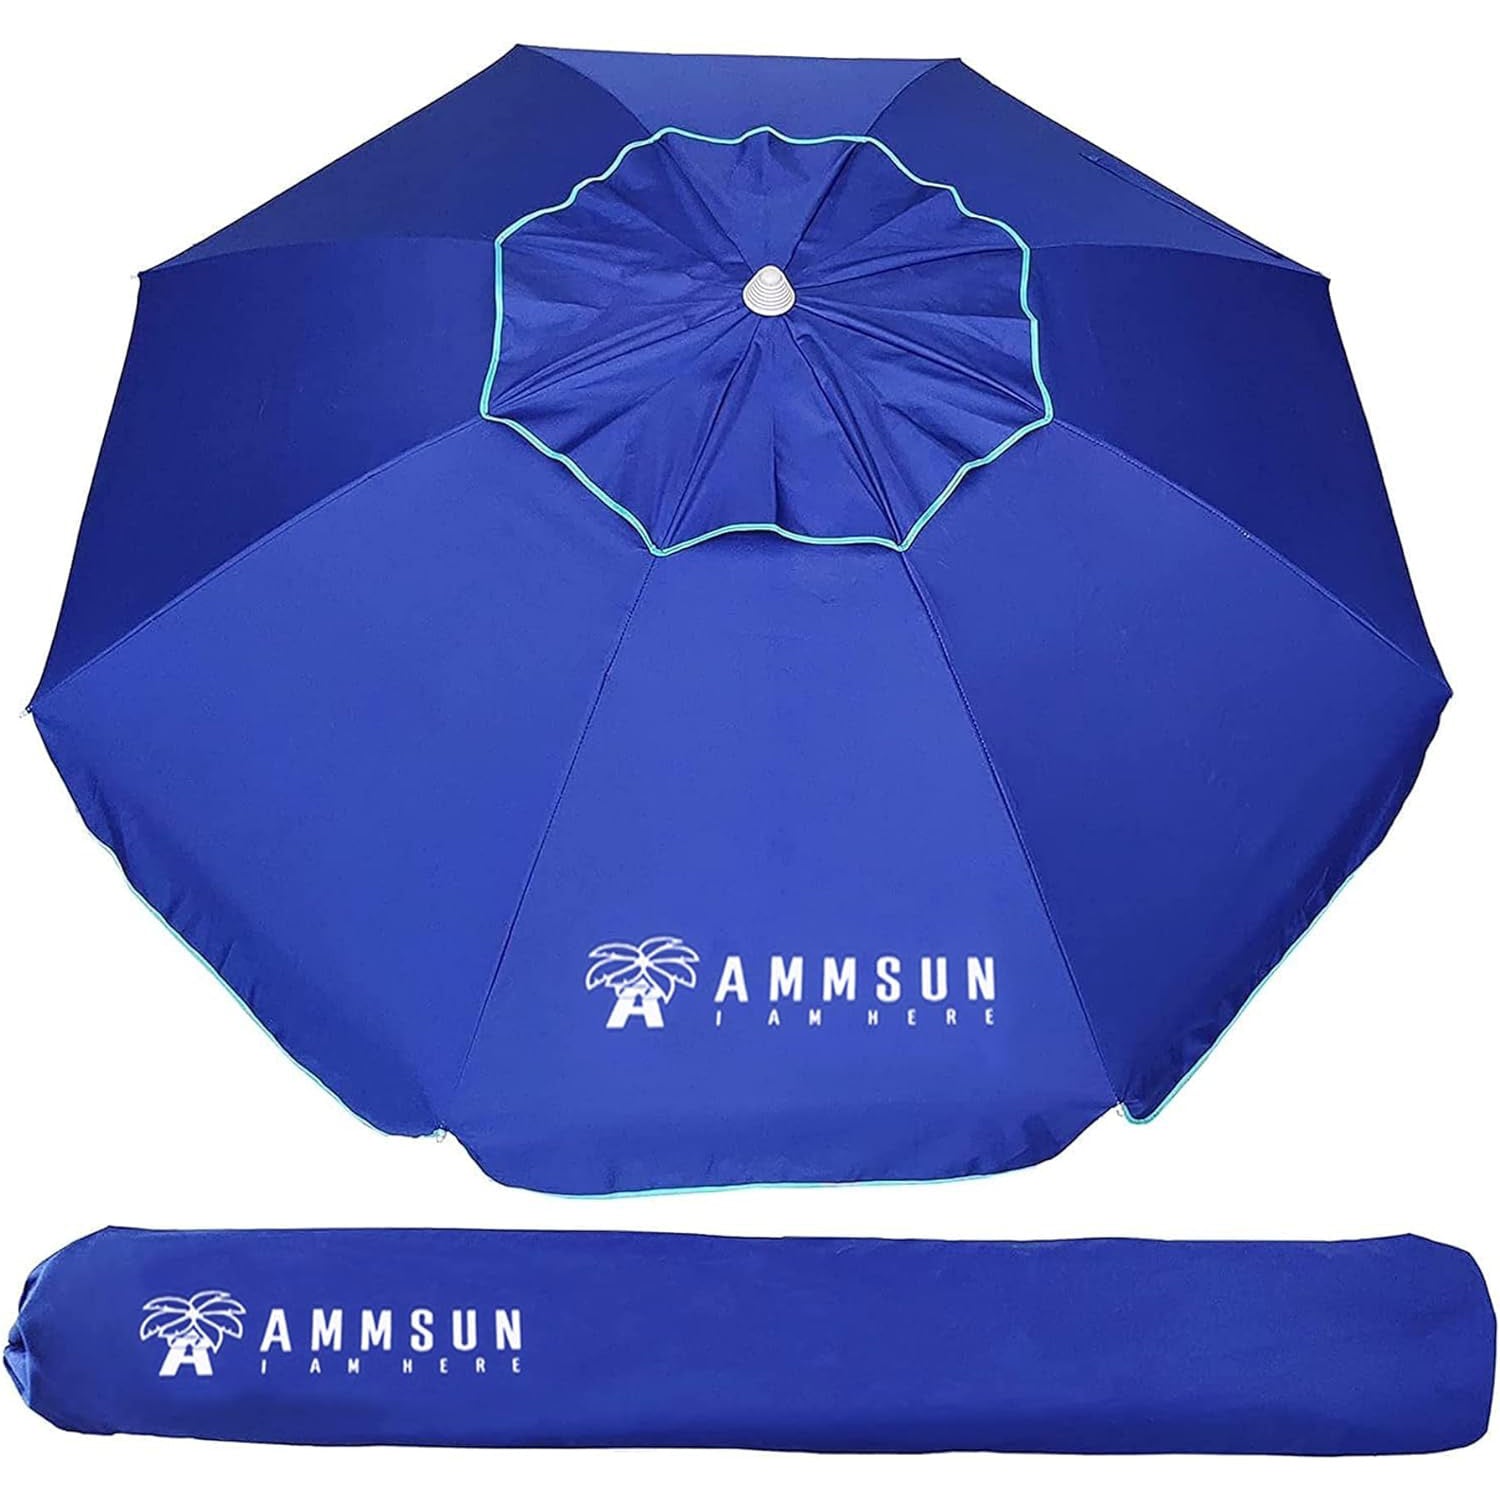 AMMSUN 6.5ft Outdoor  Pool Umbrella Blue